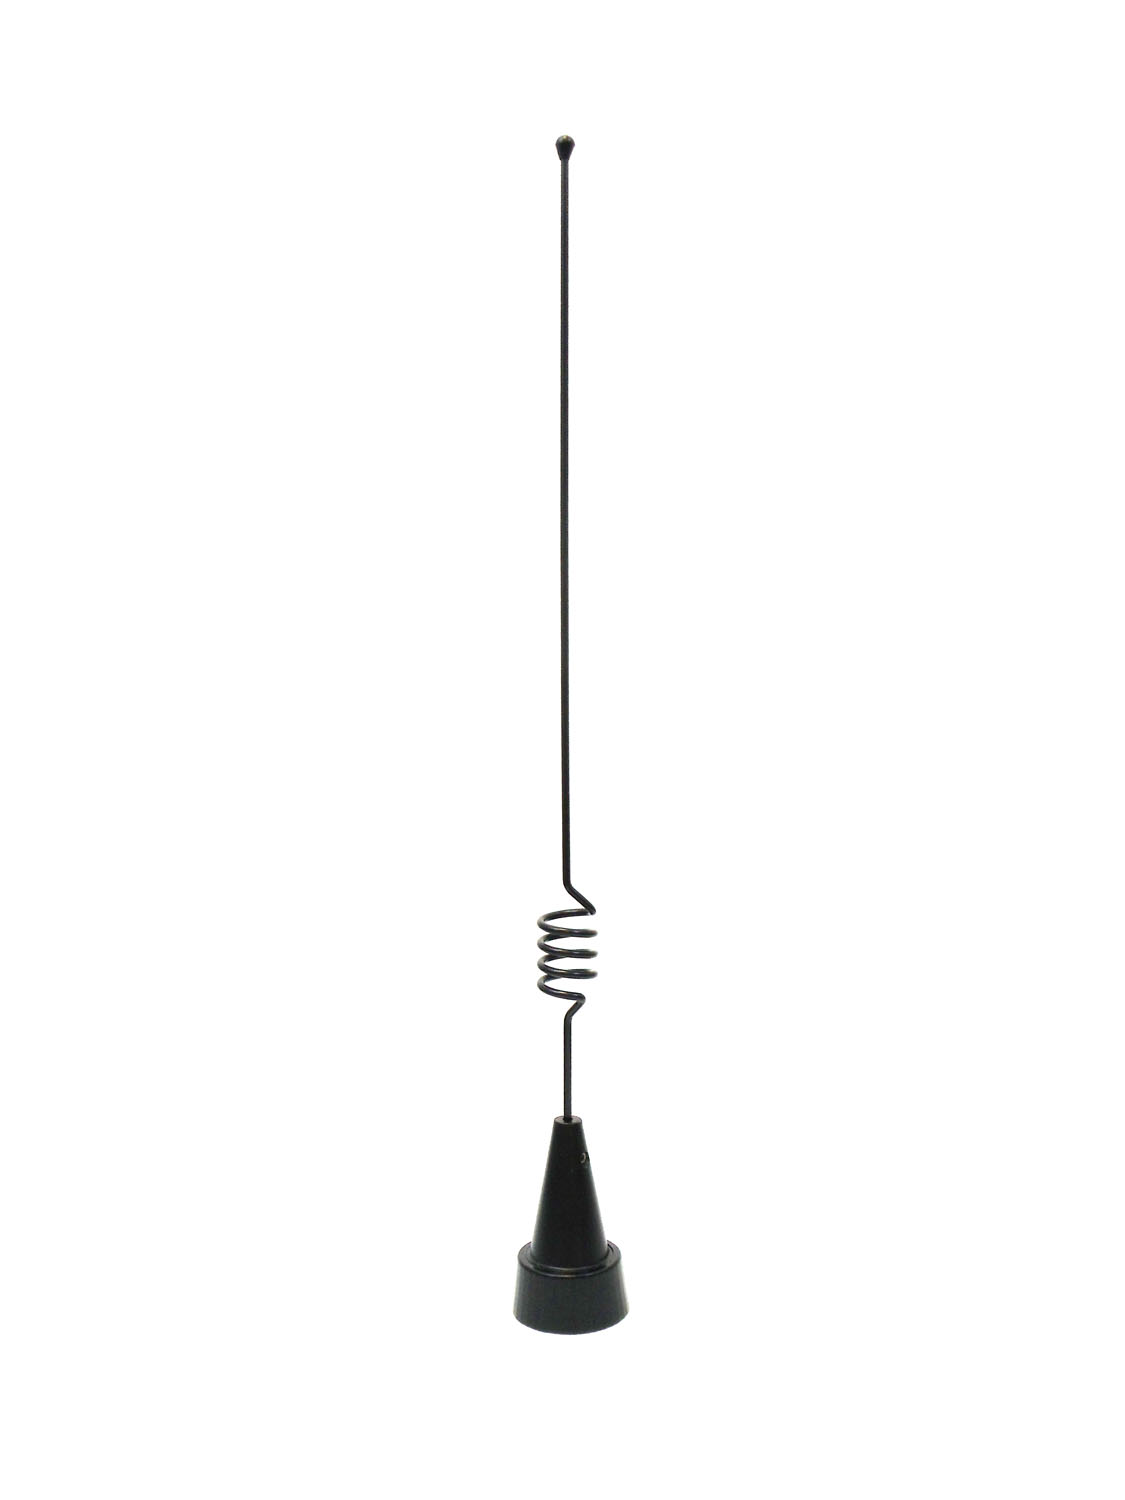 3Db 825-896Mhz Cellular Antenna (Black)